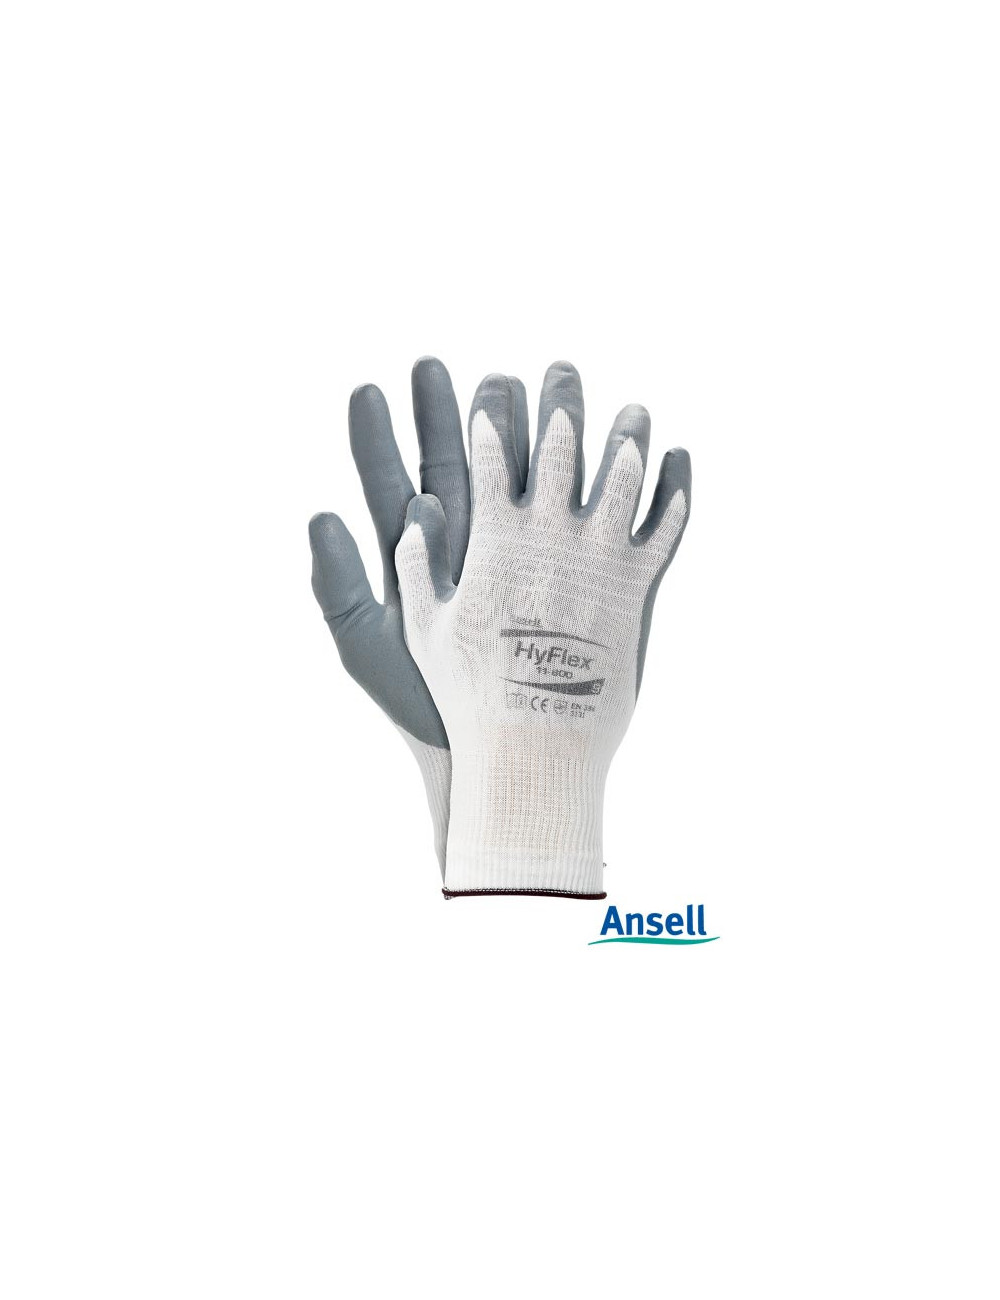 Protective gloves rahyflex11-800 ws white-gray Ansell